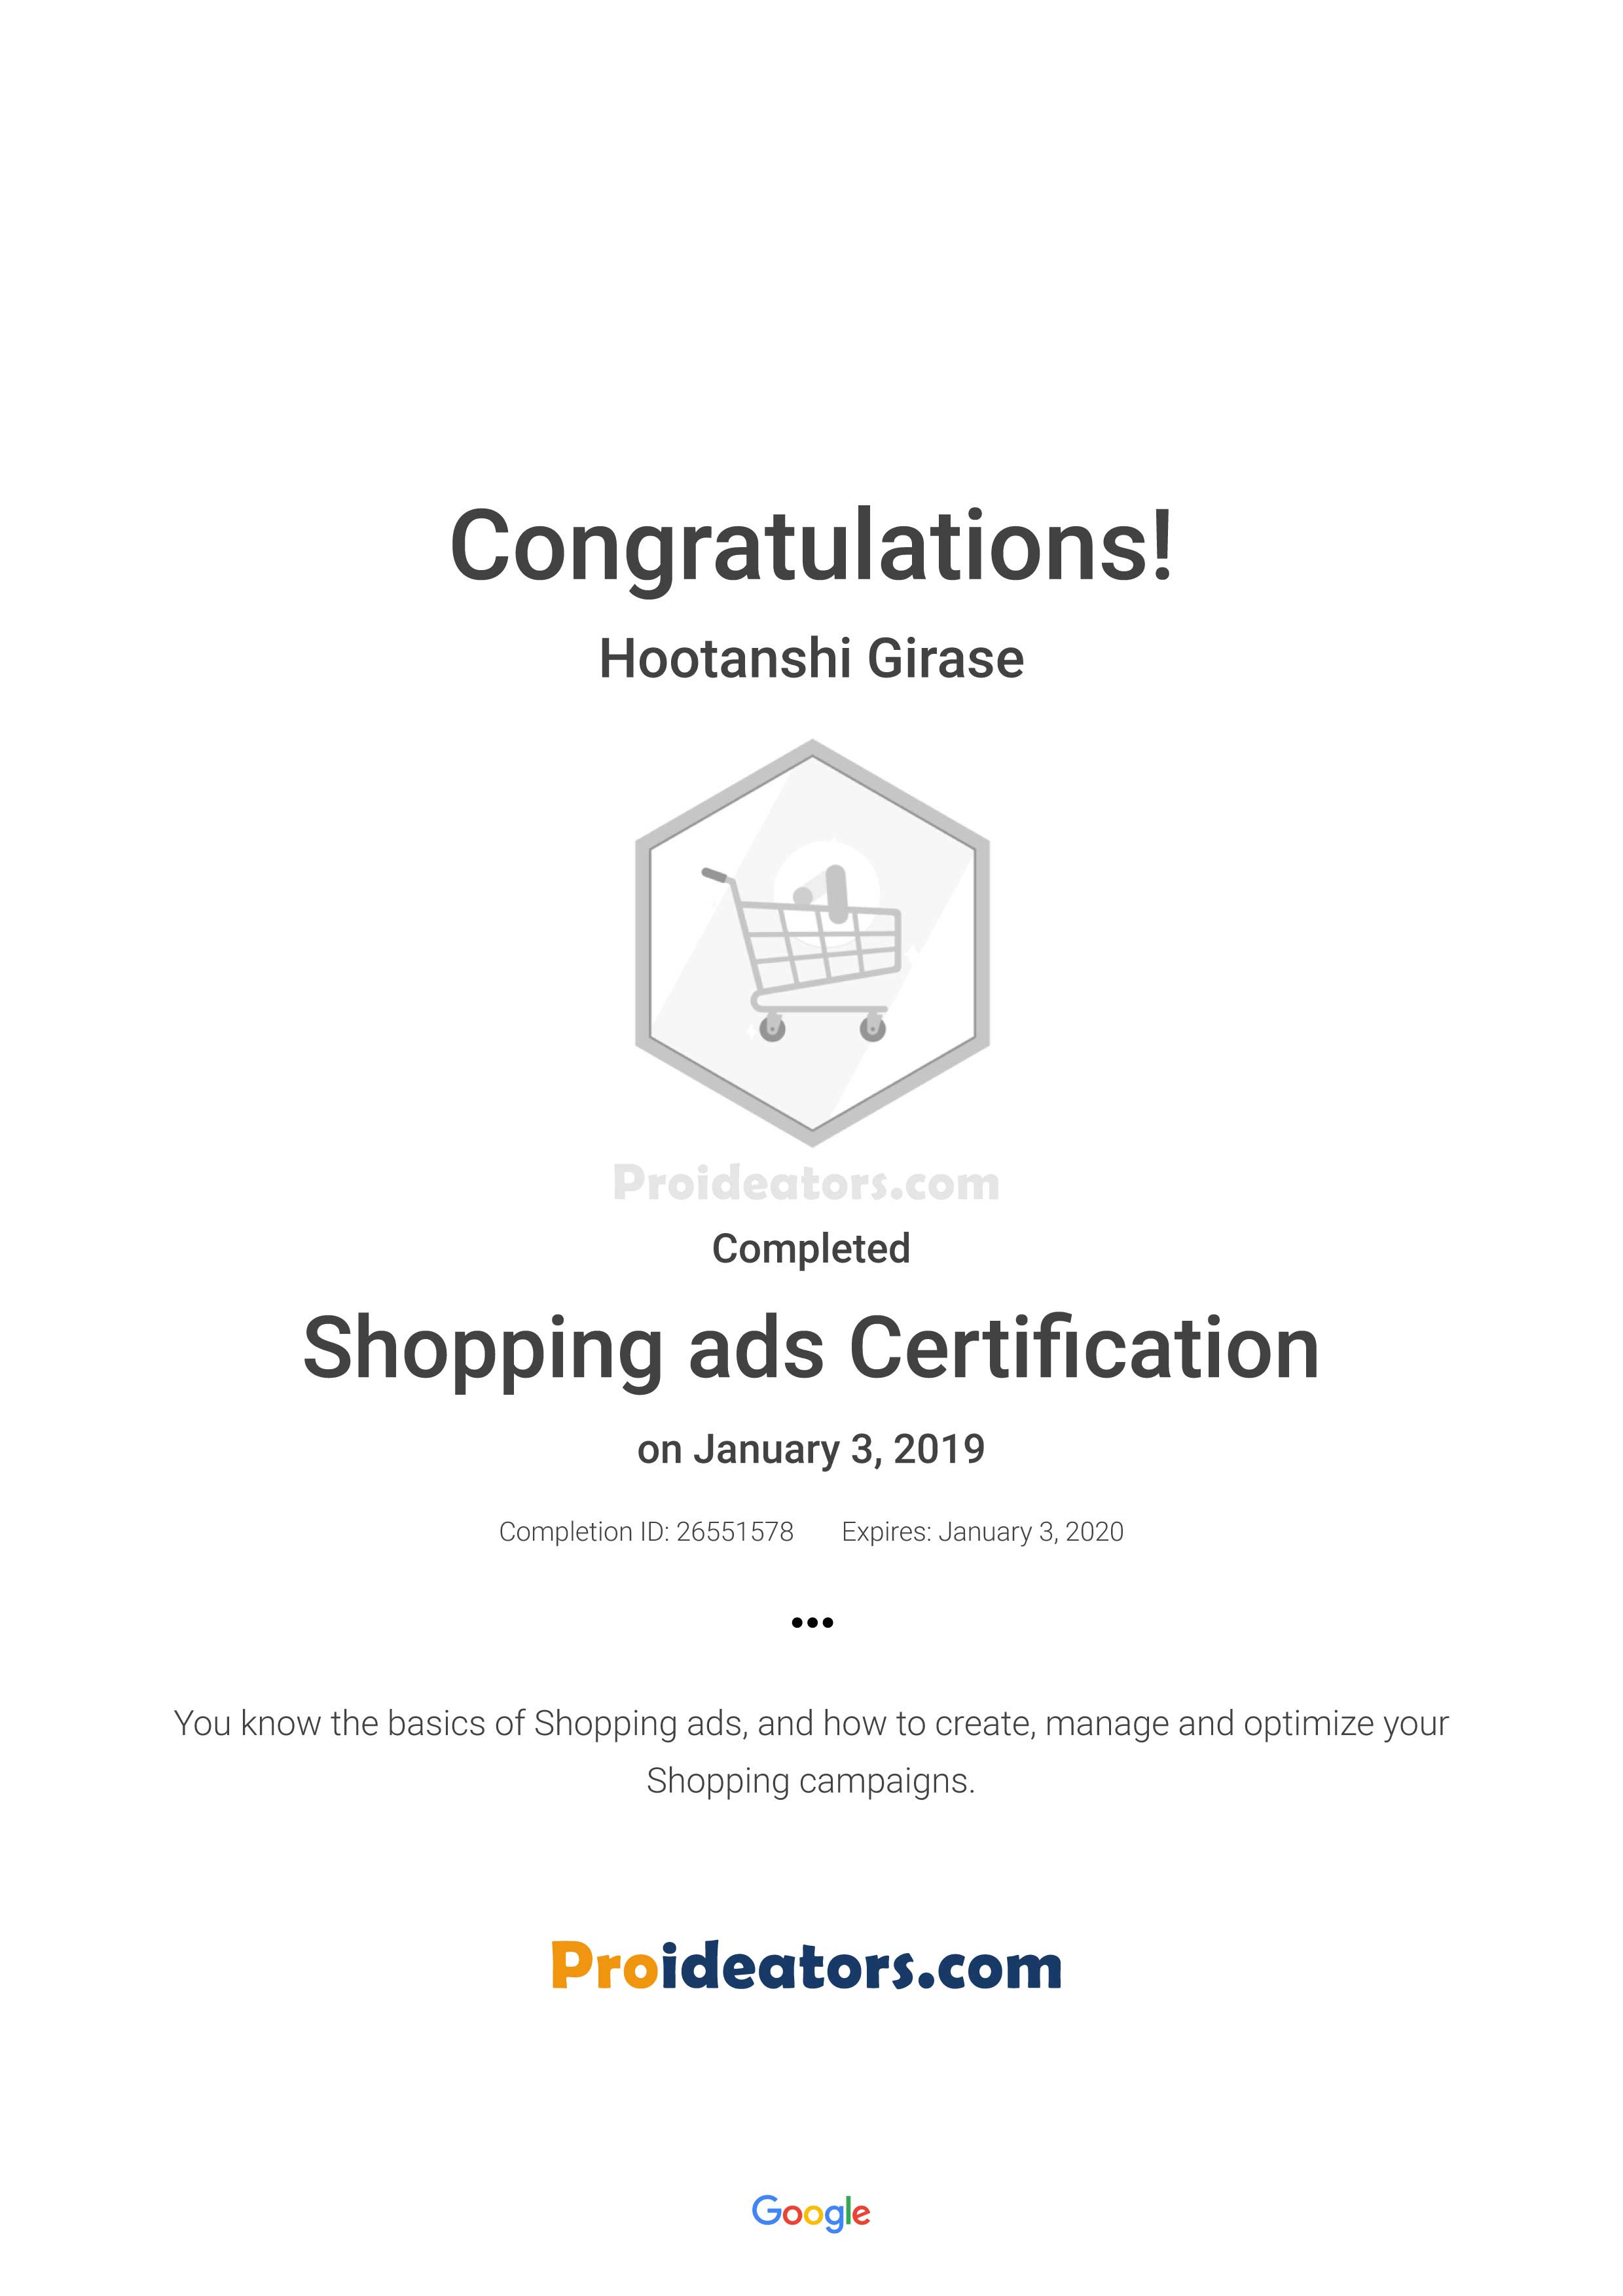 Google Shopping ads Certification